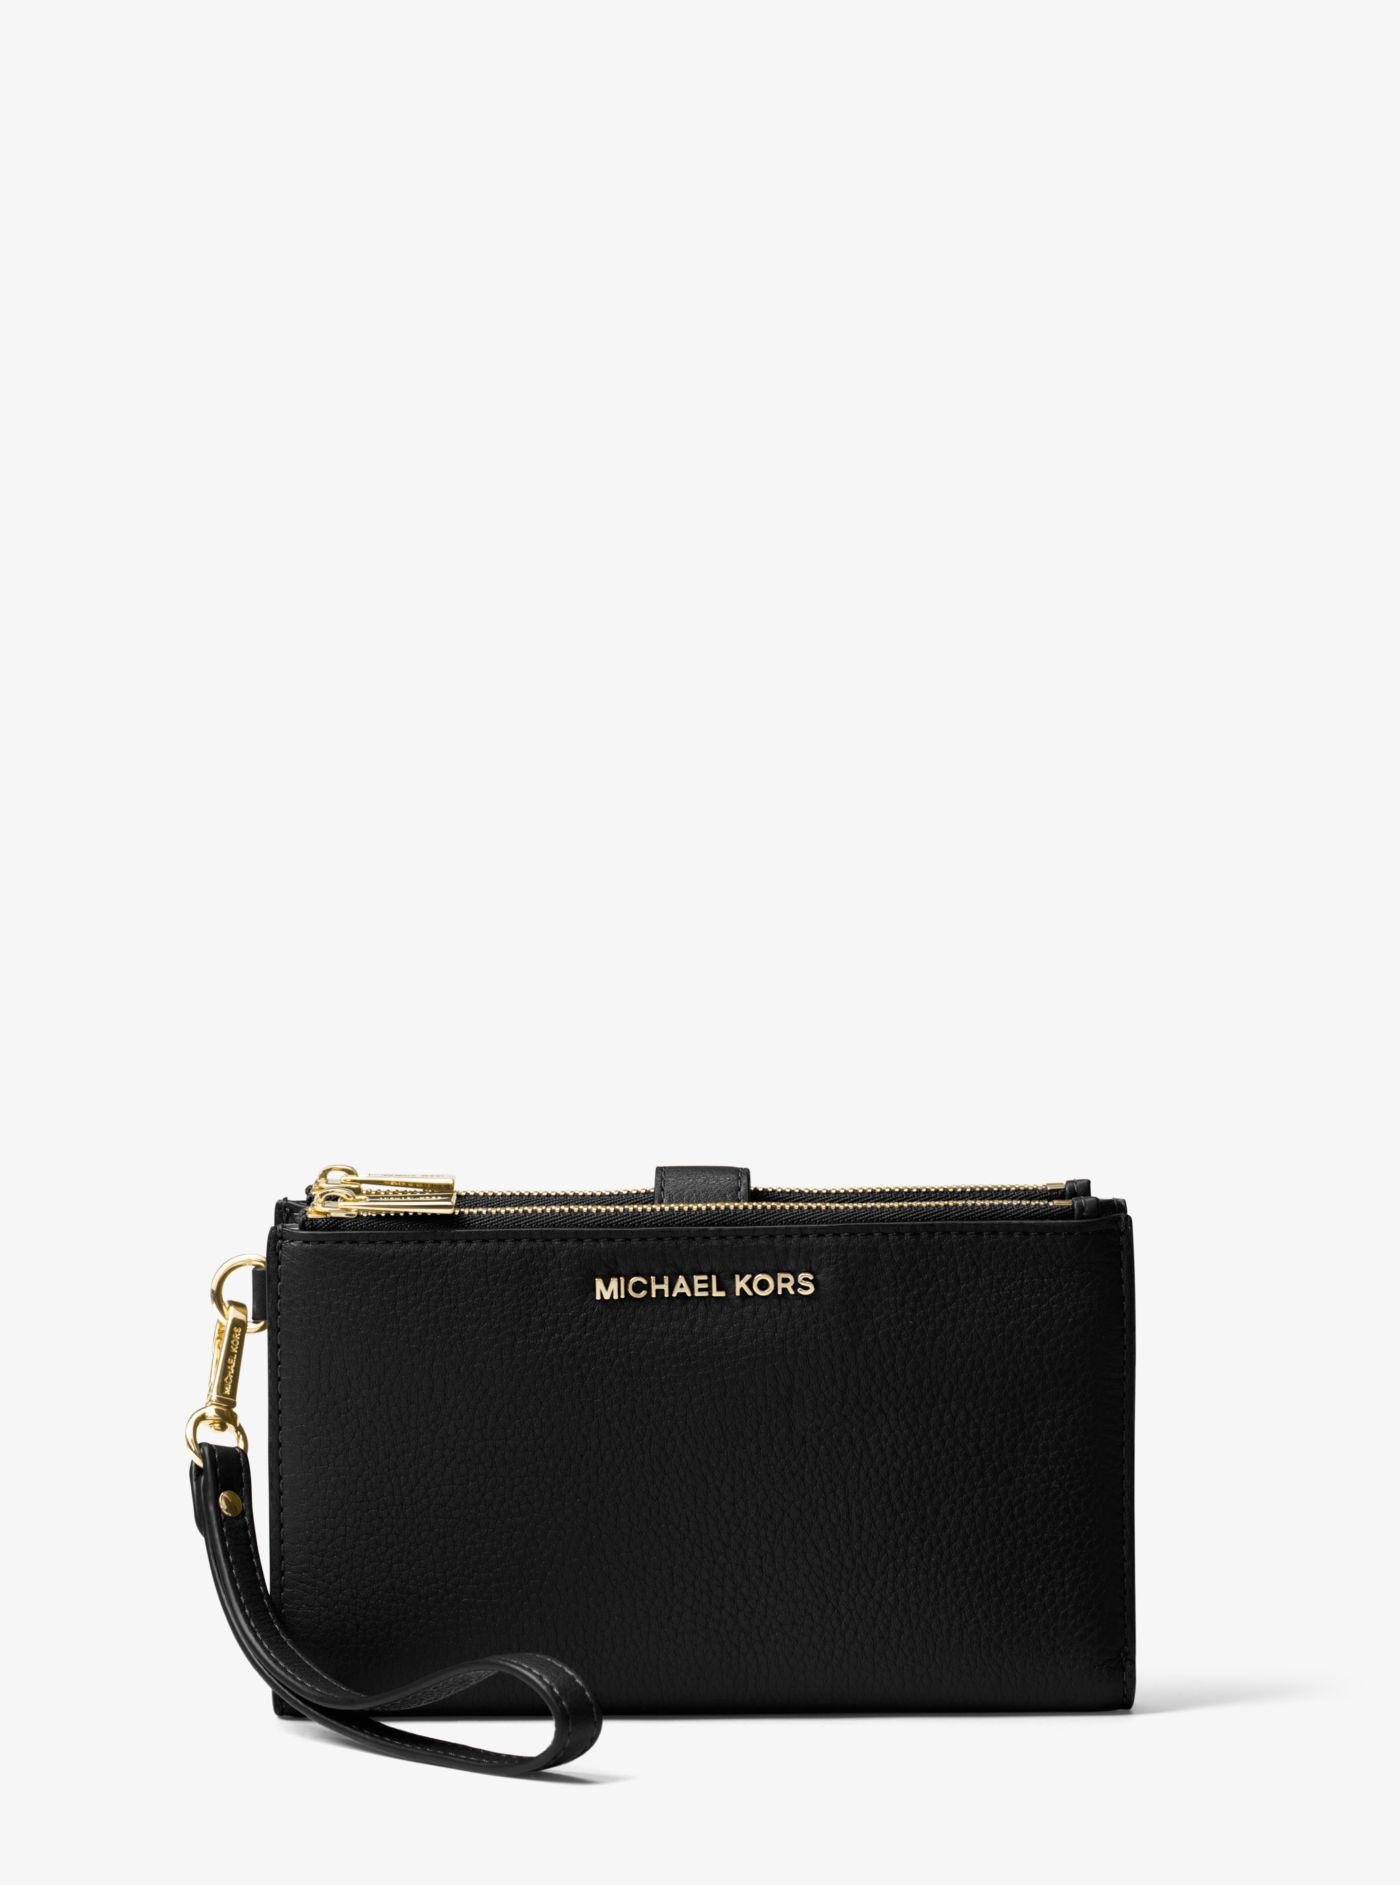 Lyst - Michael Kors Adele Leather Smartphone Wallet in Black